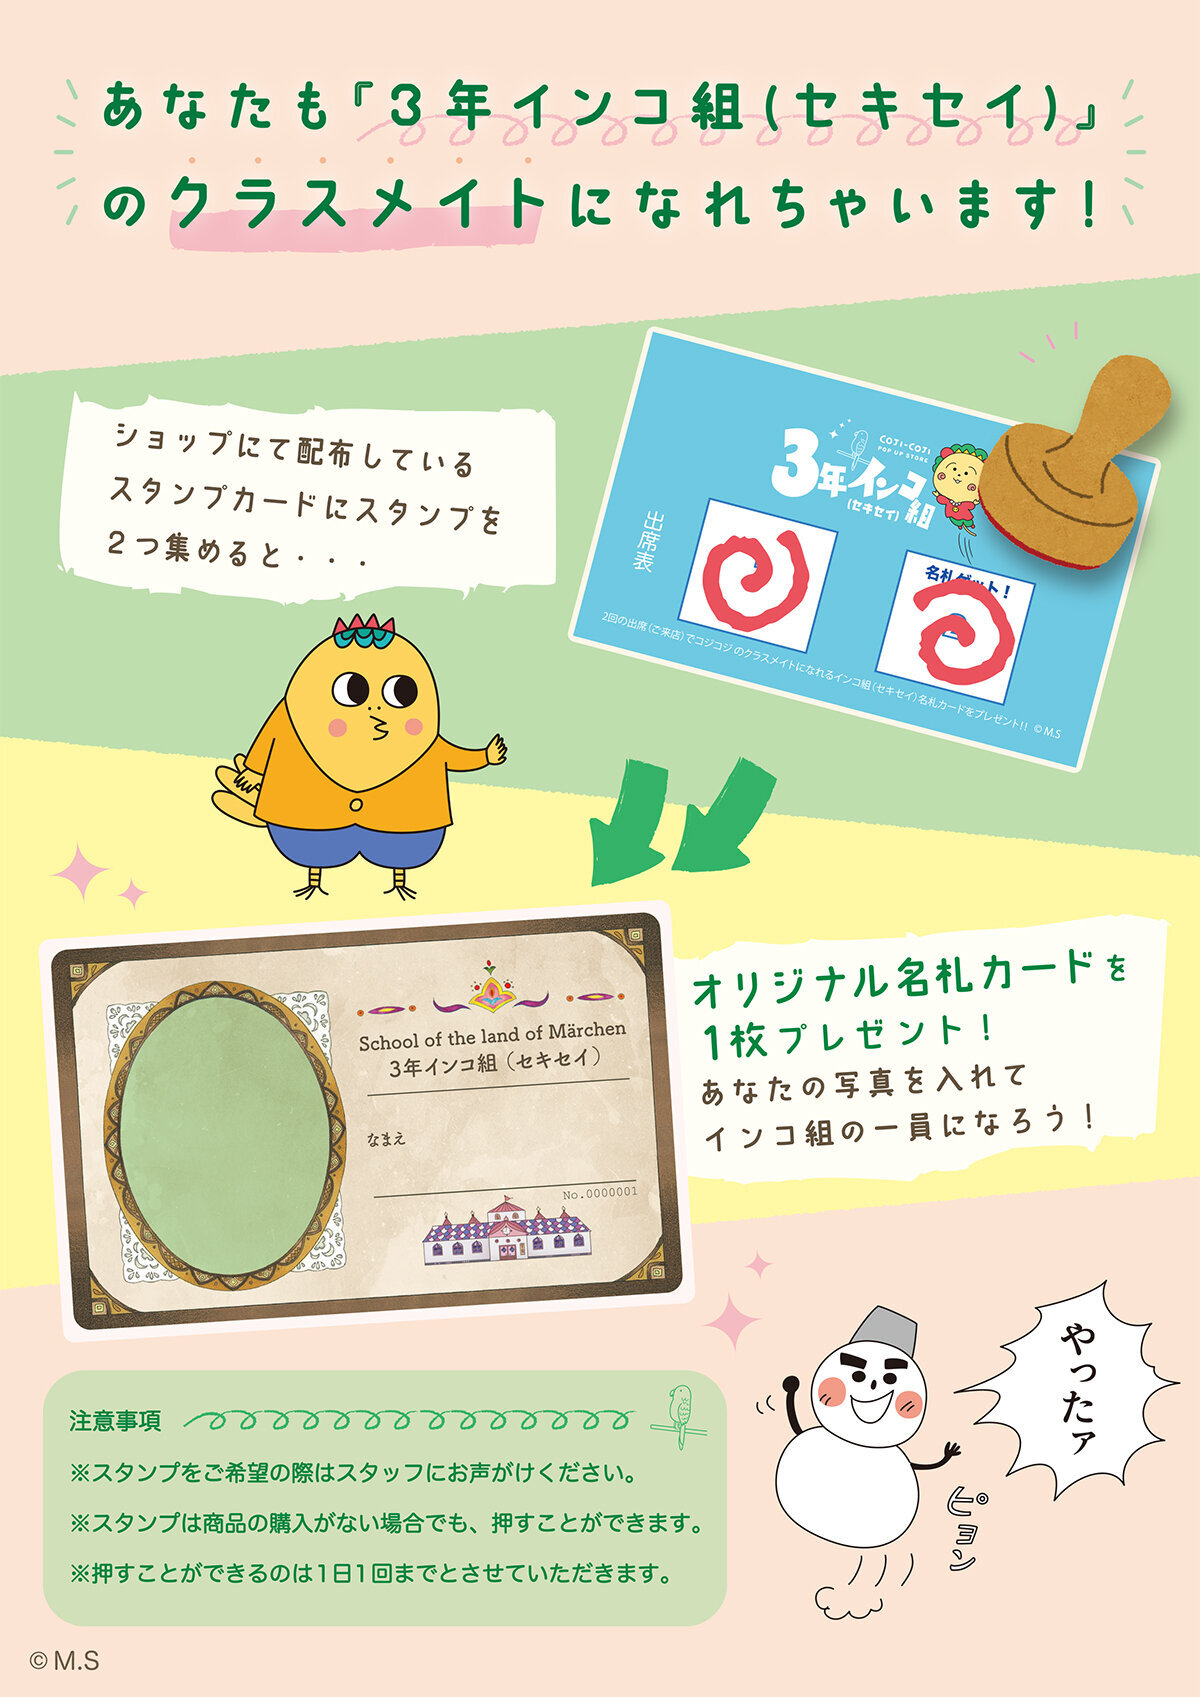 https://cojicoji.site/news/images/20220415nagareyama_sekisei_stampcard.jpg